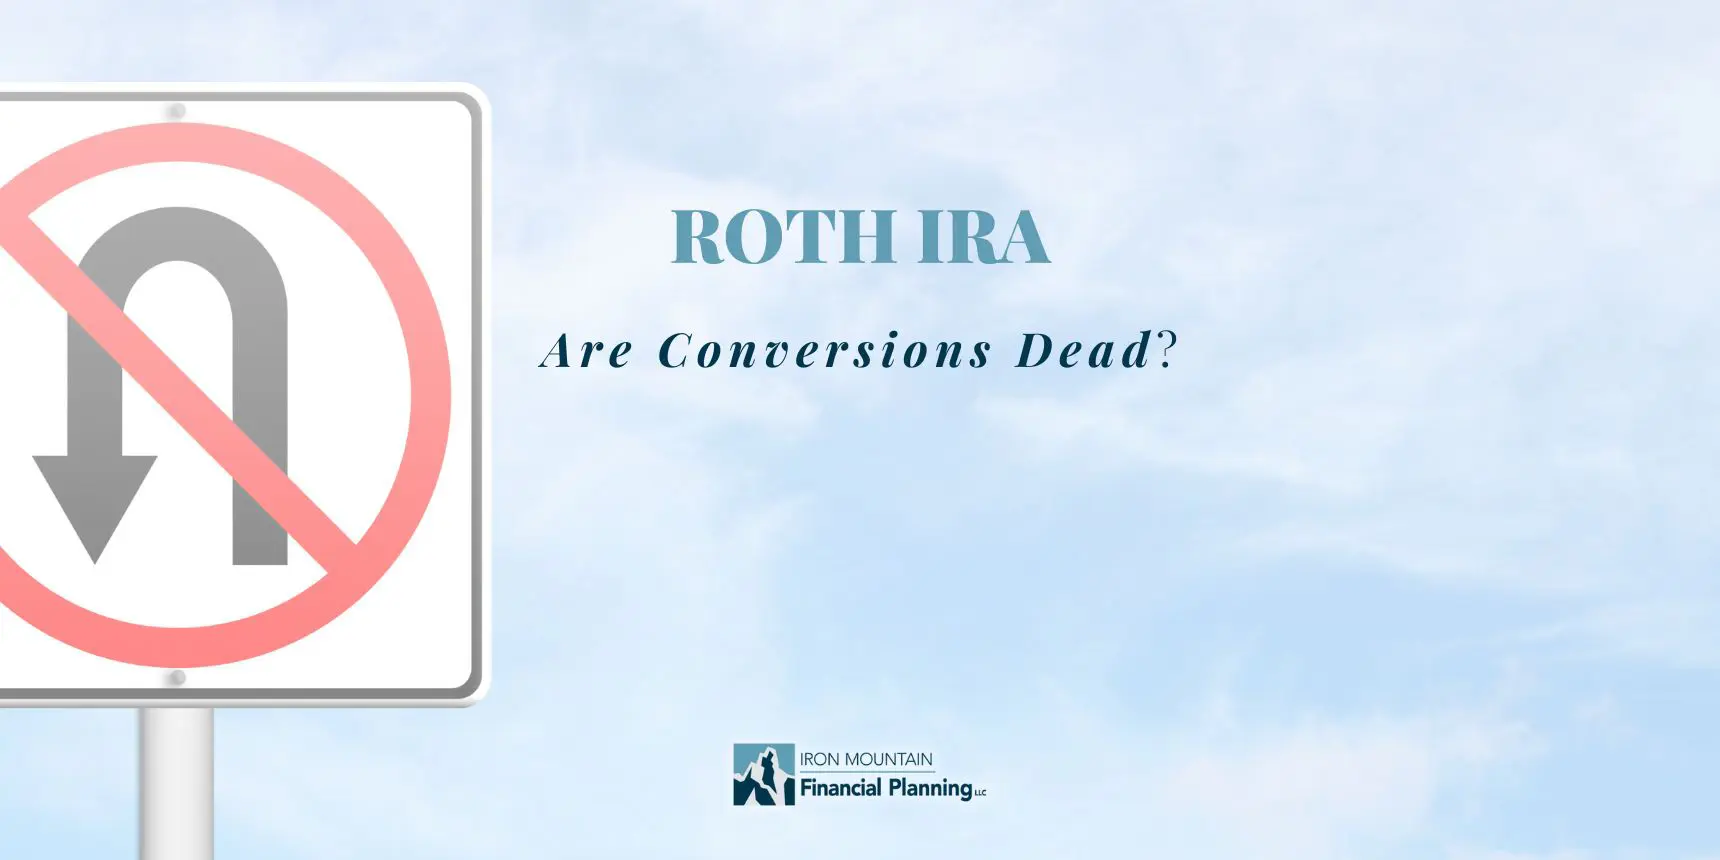 Are Roth IRA Conversions Dead?